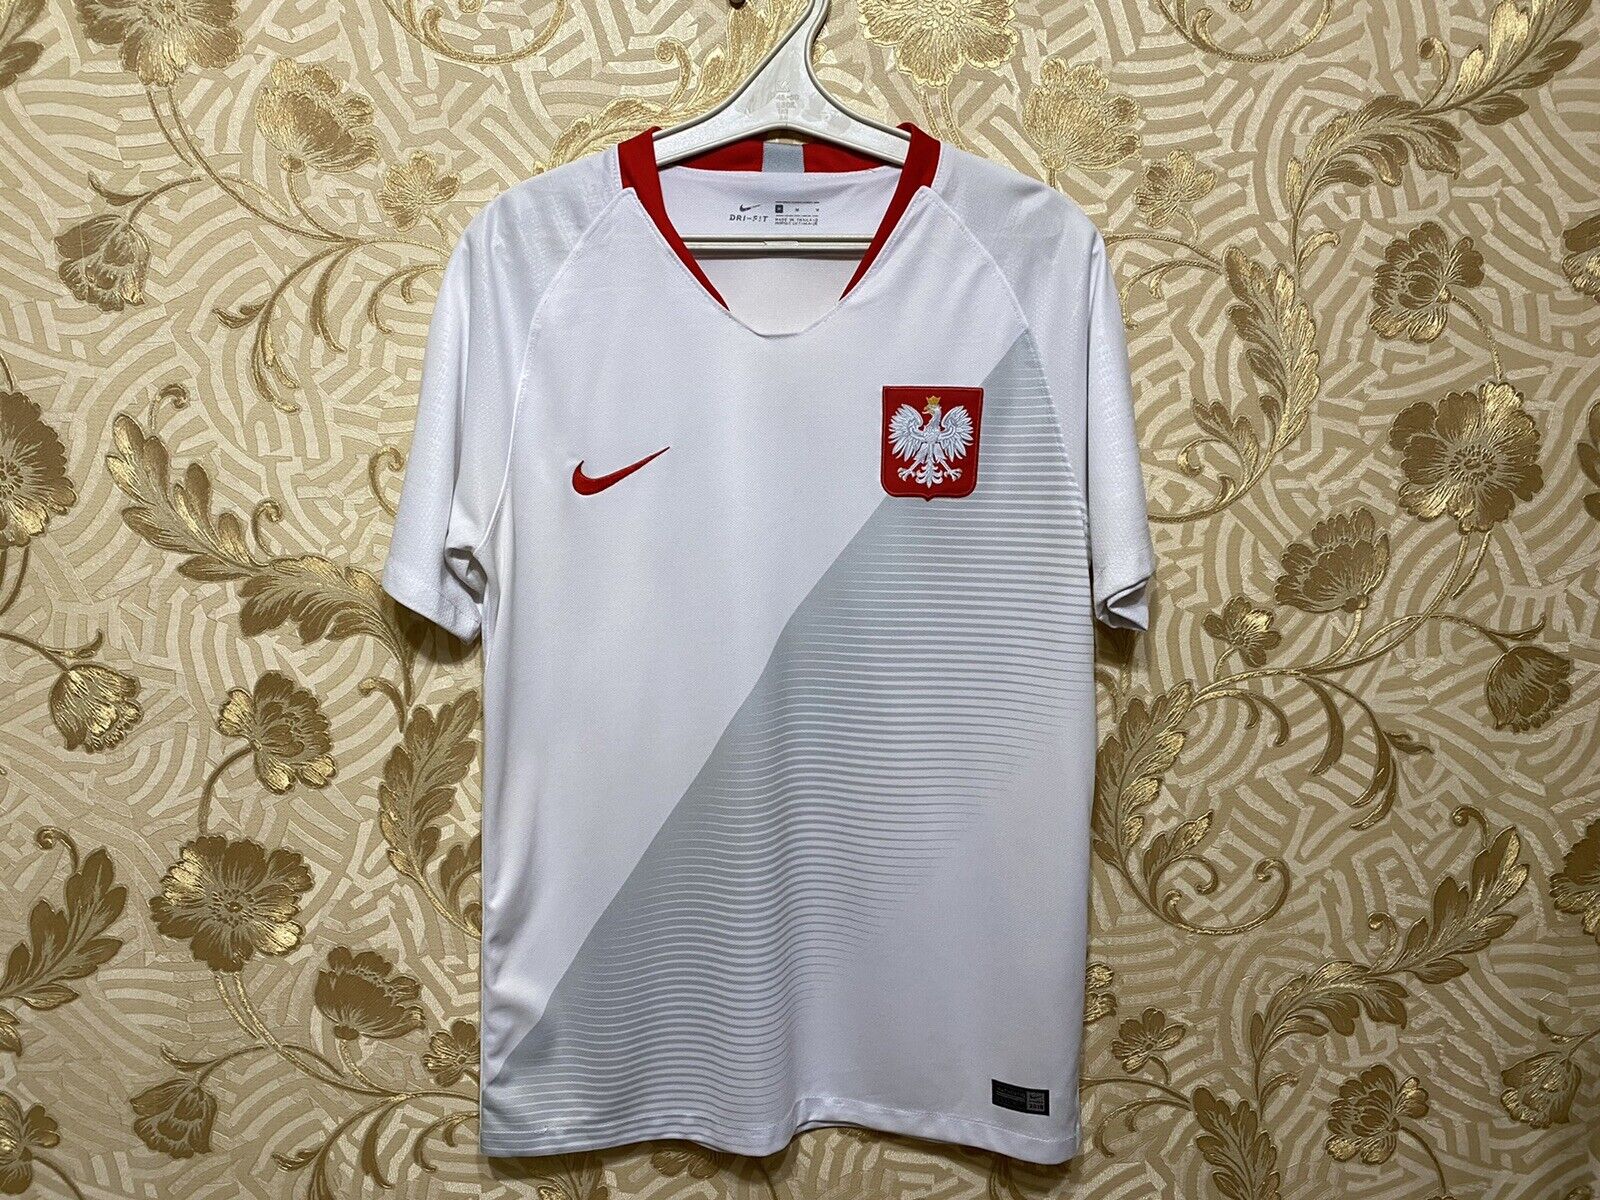 2019 Poland Home Nike shirt Jersey